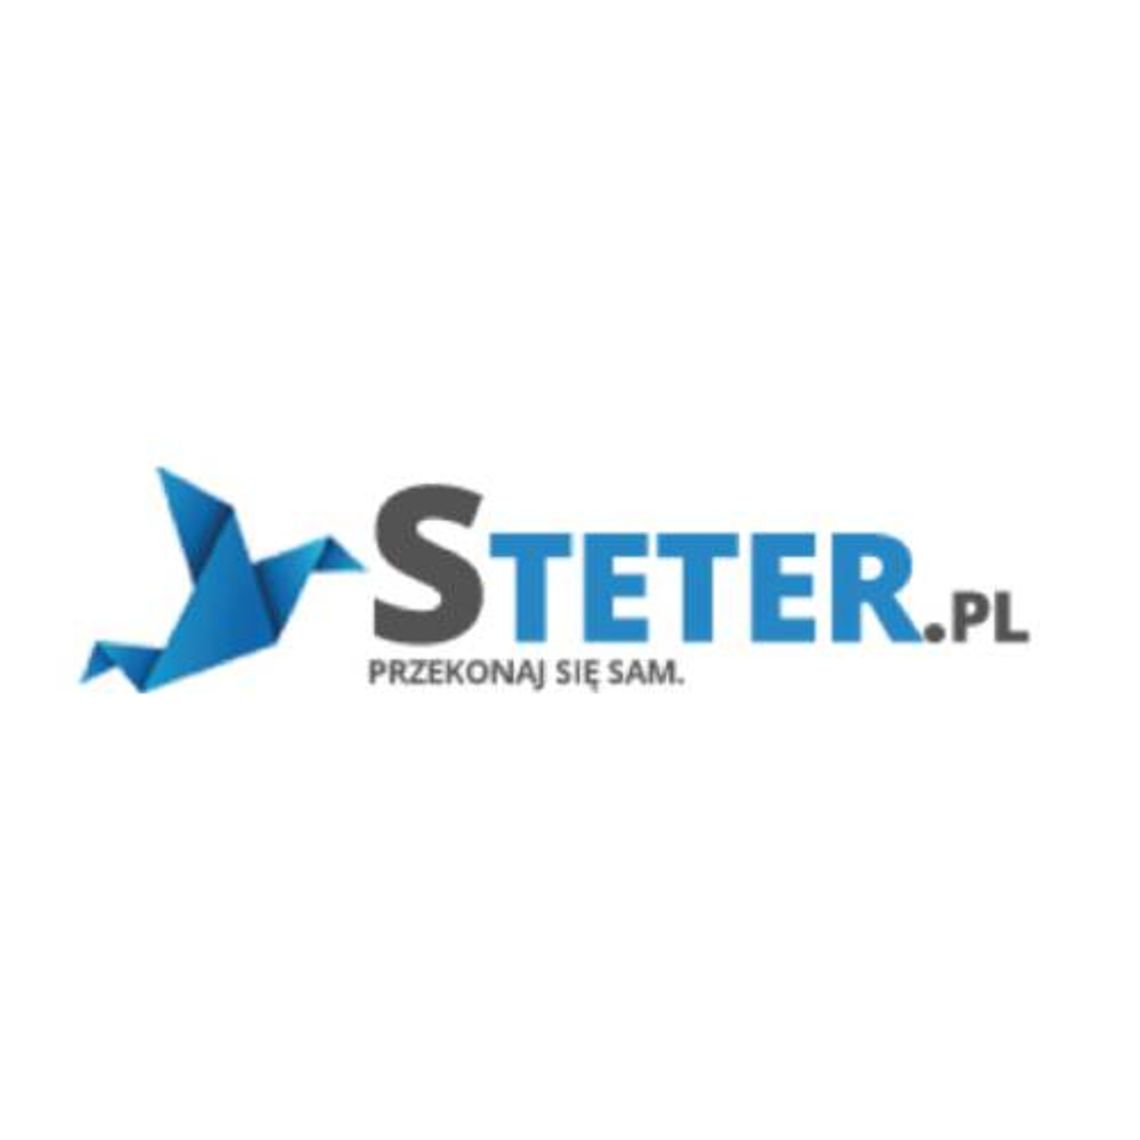 Steter.pl - akcesoria dla domu i ogrodu  